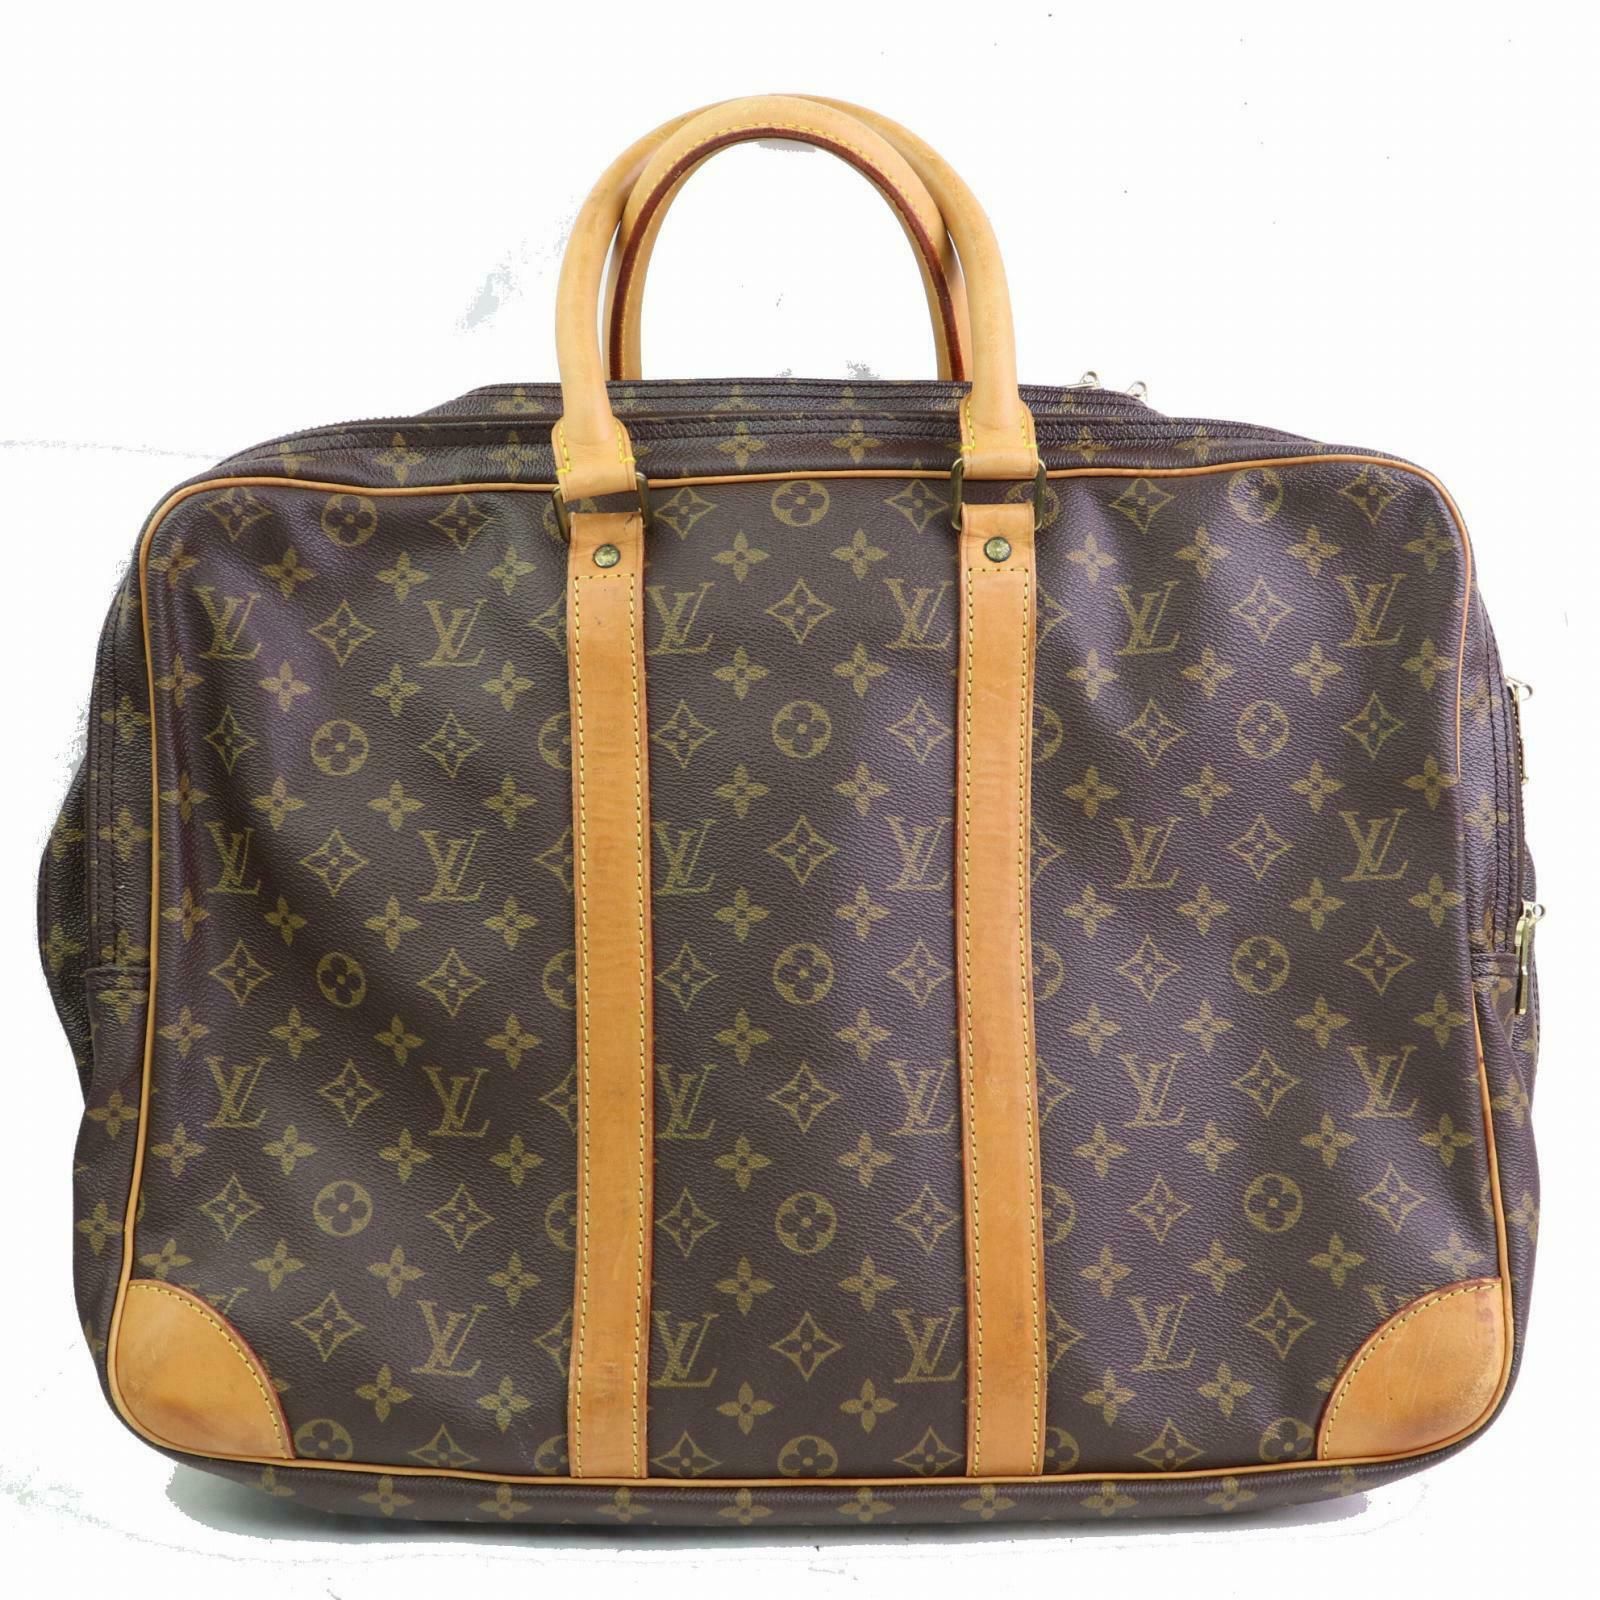 Authentic Louis Vuitton Business Bag Sirius 45 M41408 Browns Monogram 11322